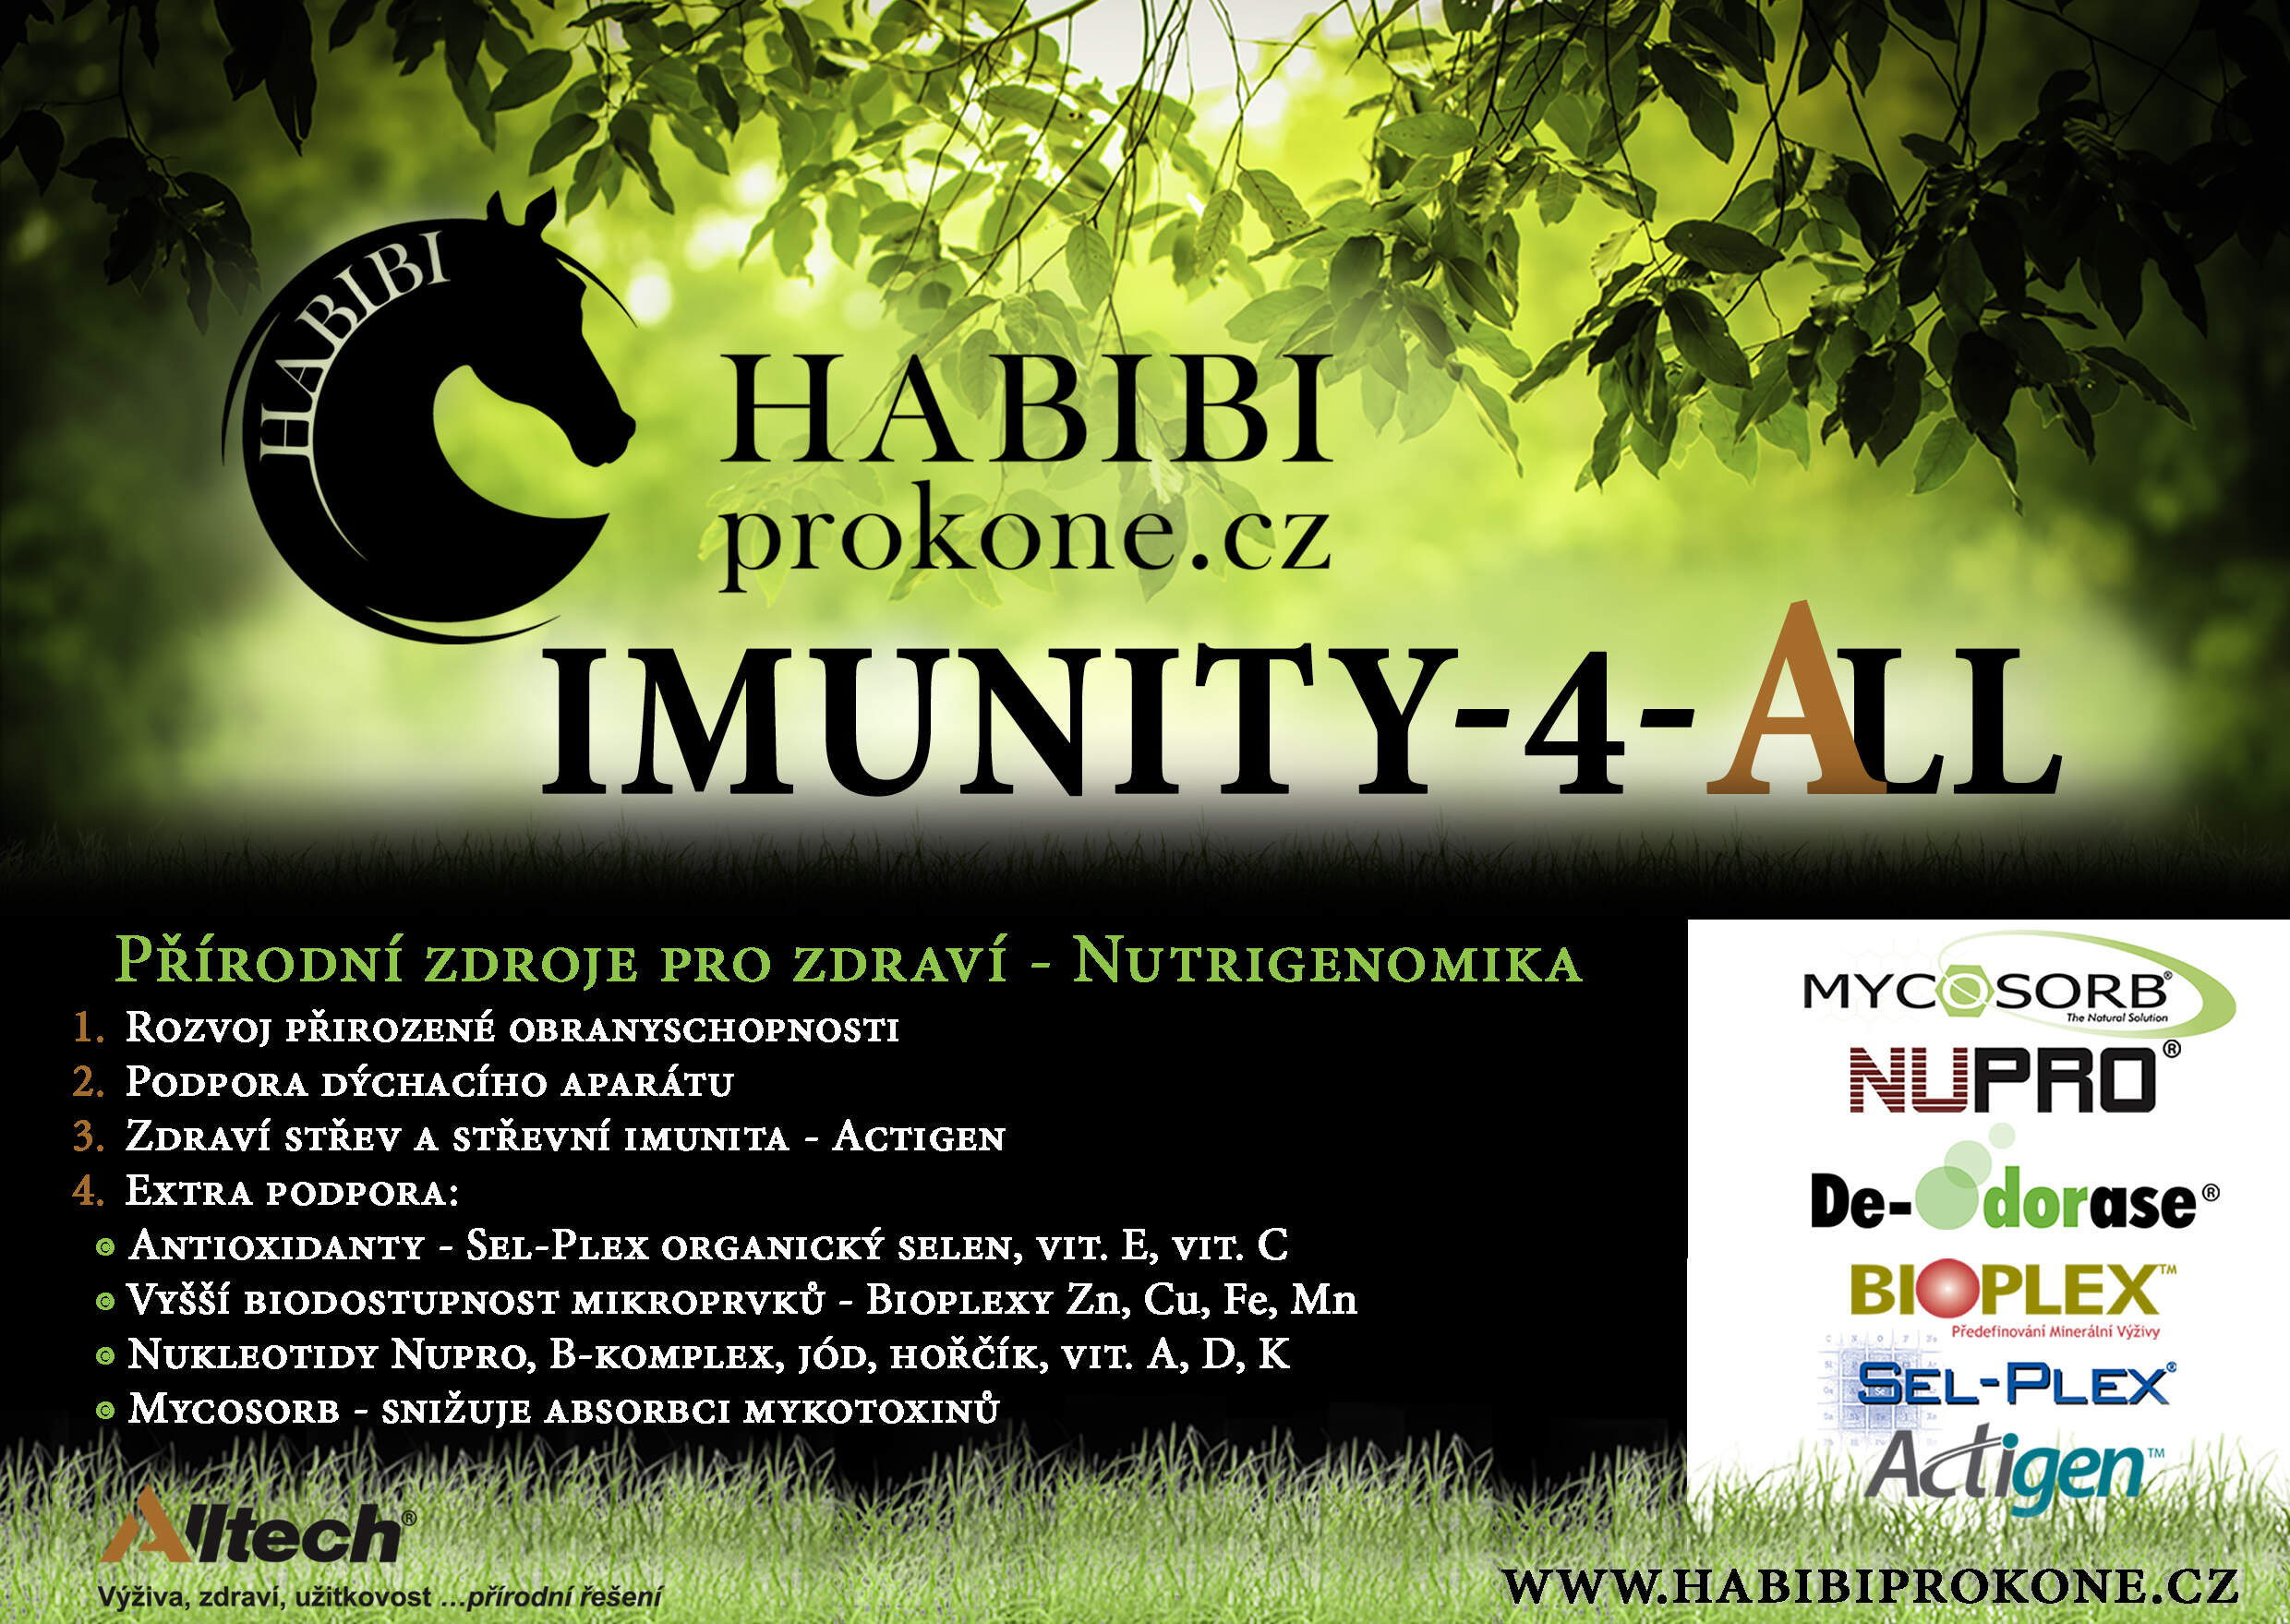 Habibi IMUNITY-4-ALL